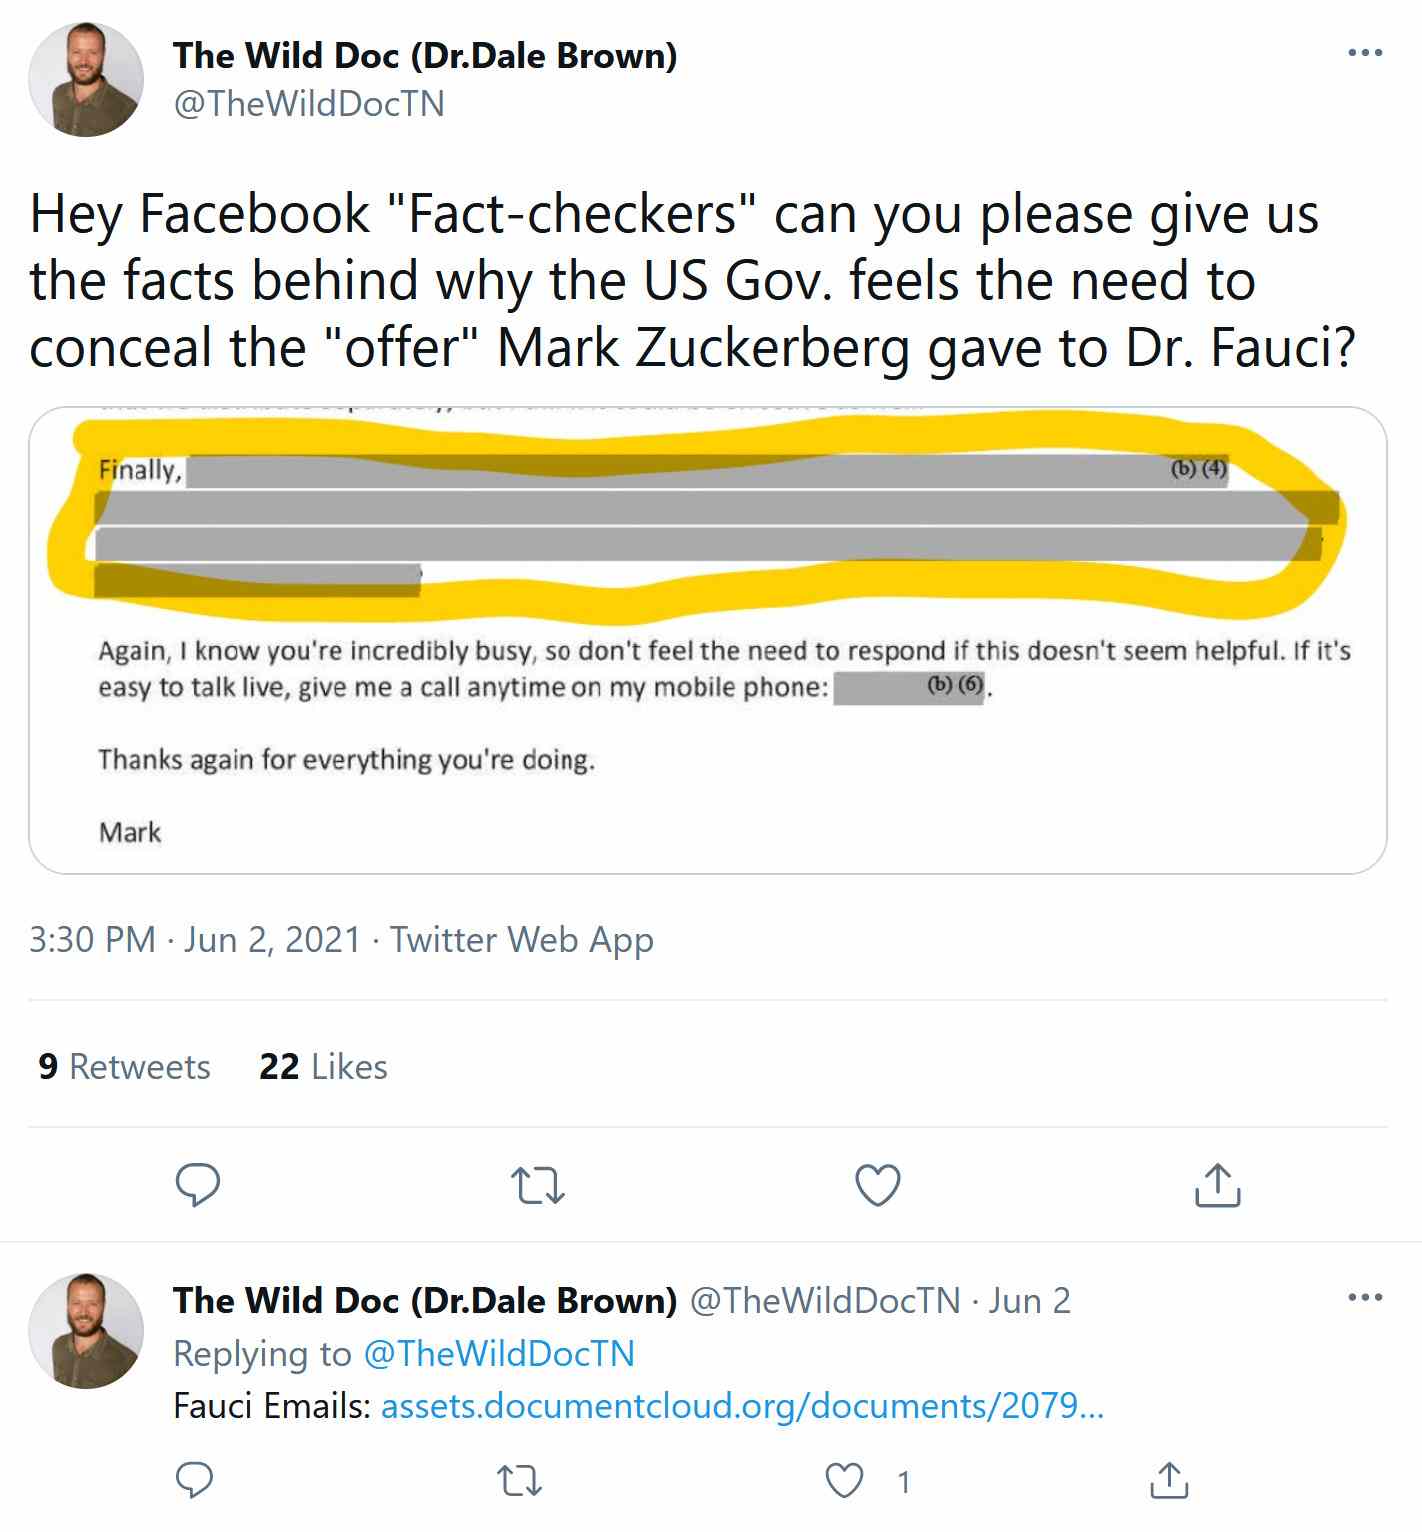 What Did Mark Zuckerberg Offer?